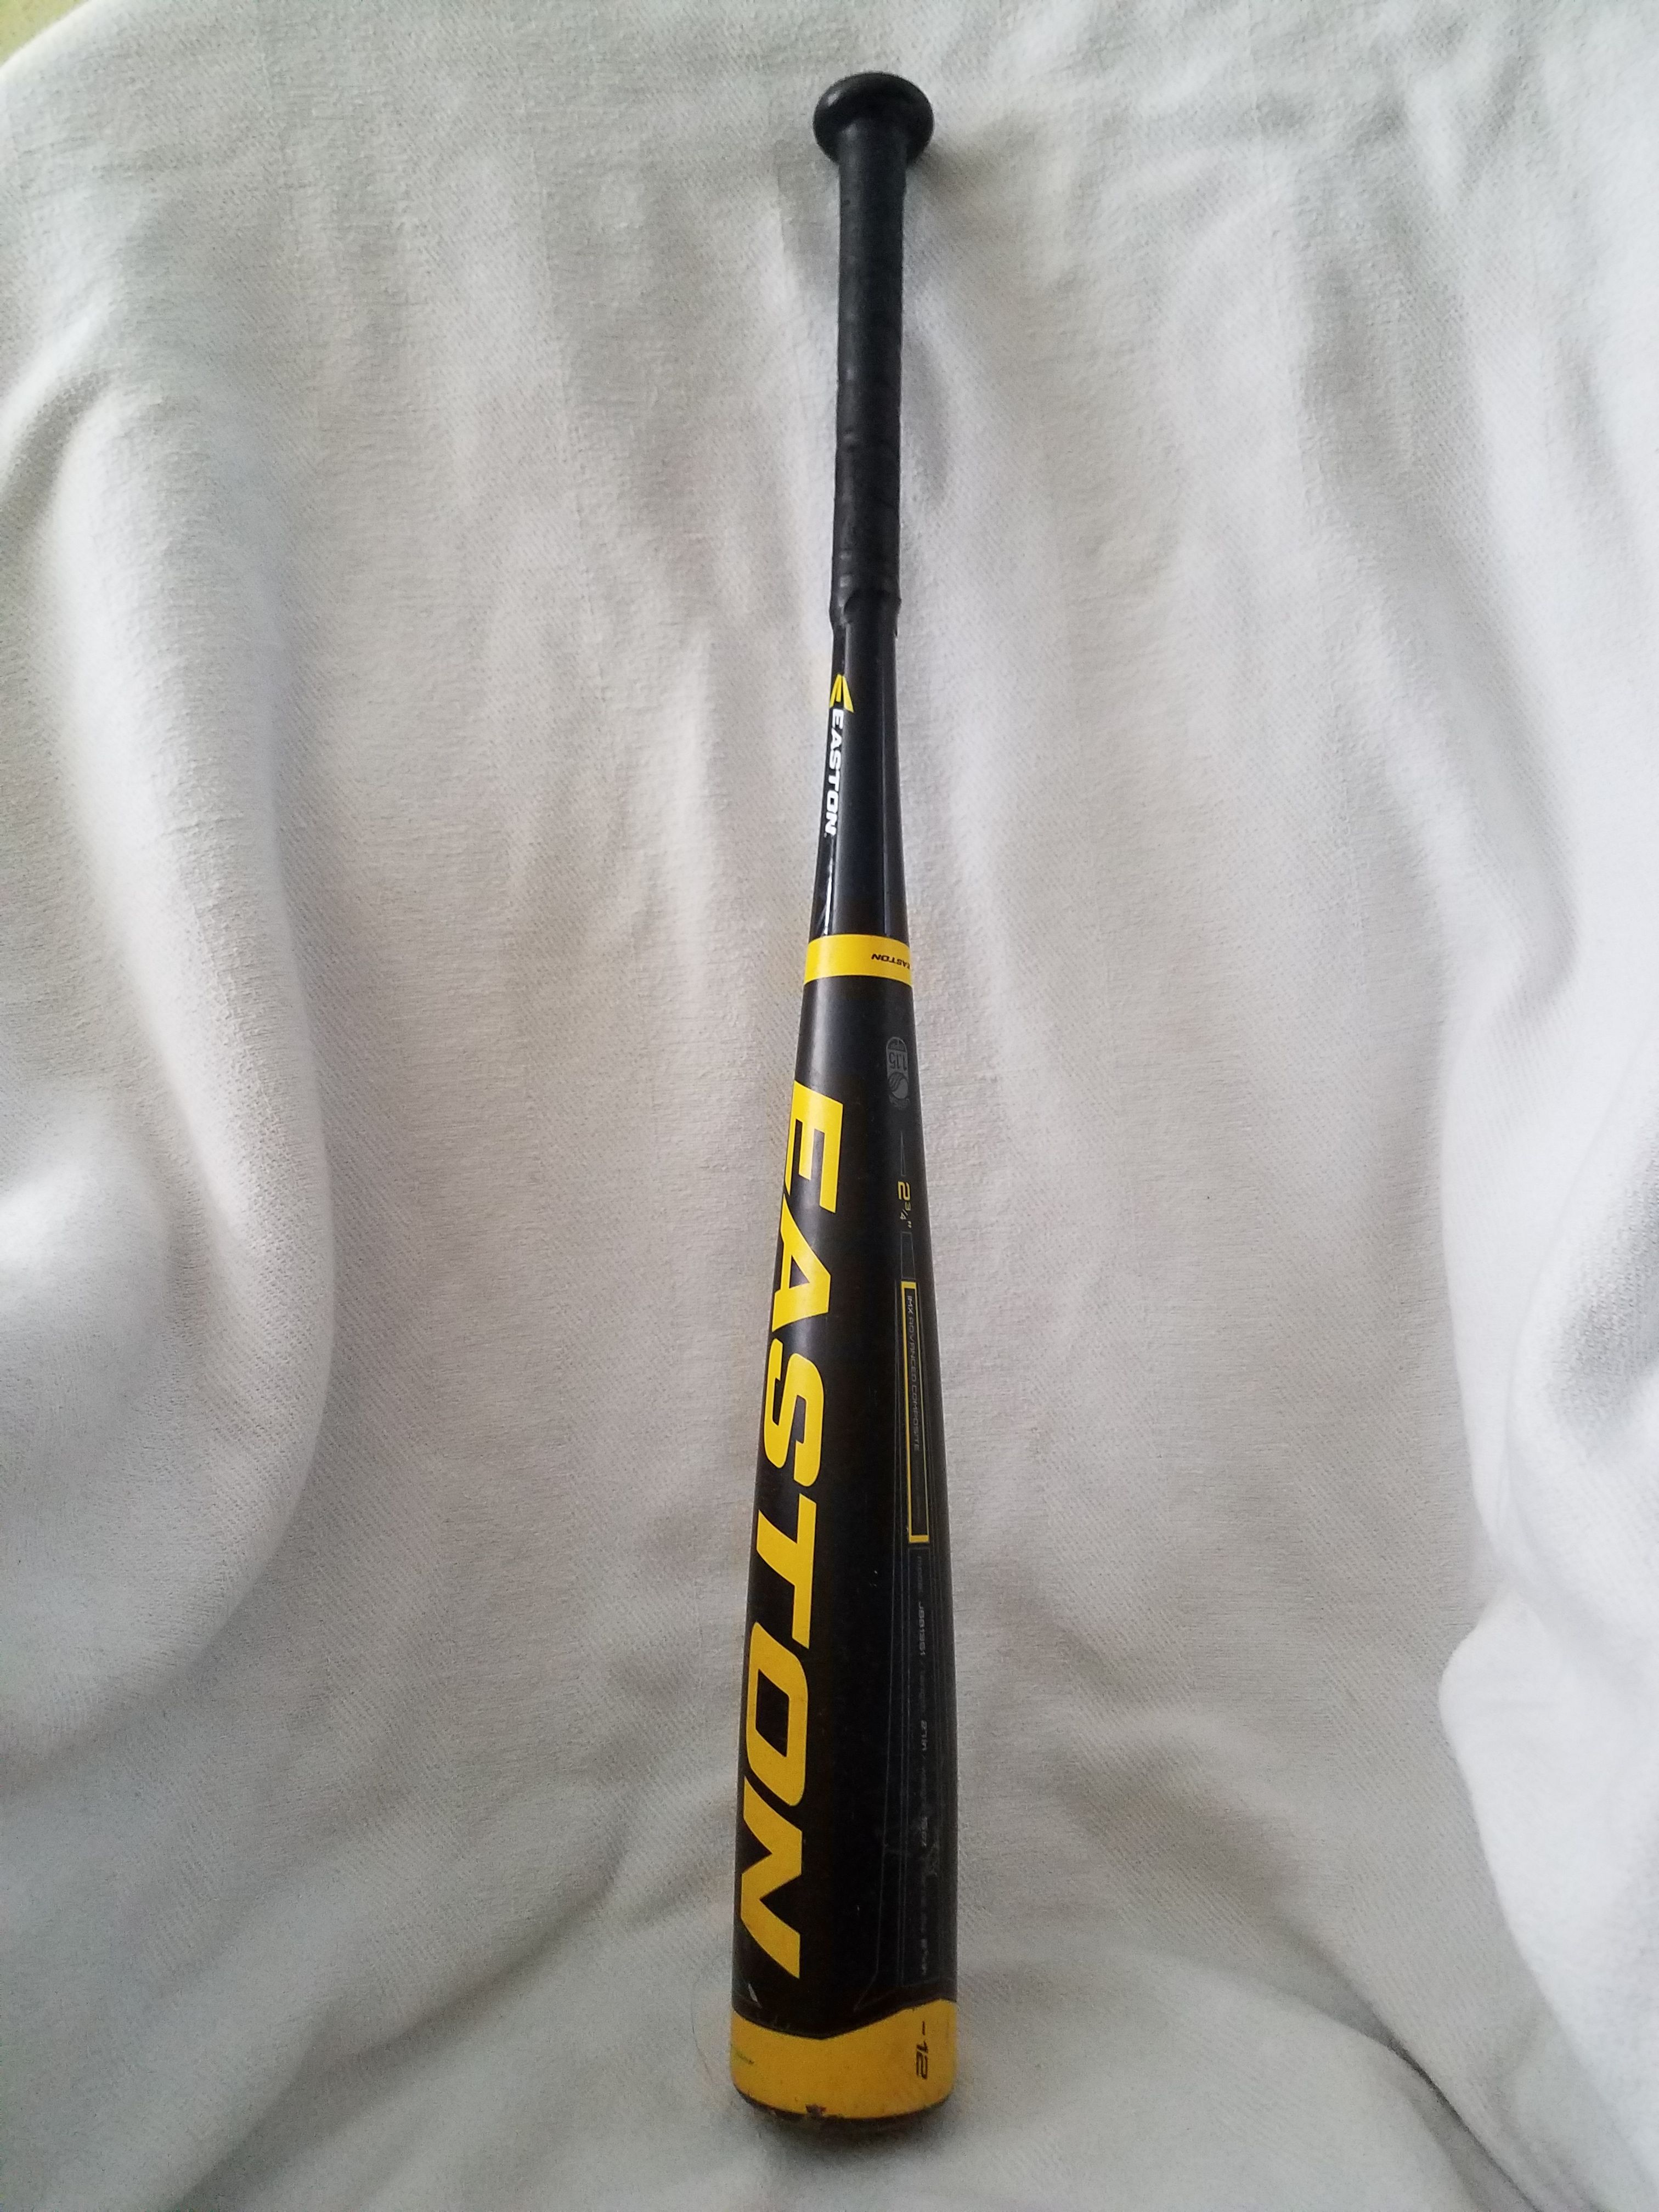 Easton s1 baseball bat size 27/15 2 3/4